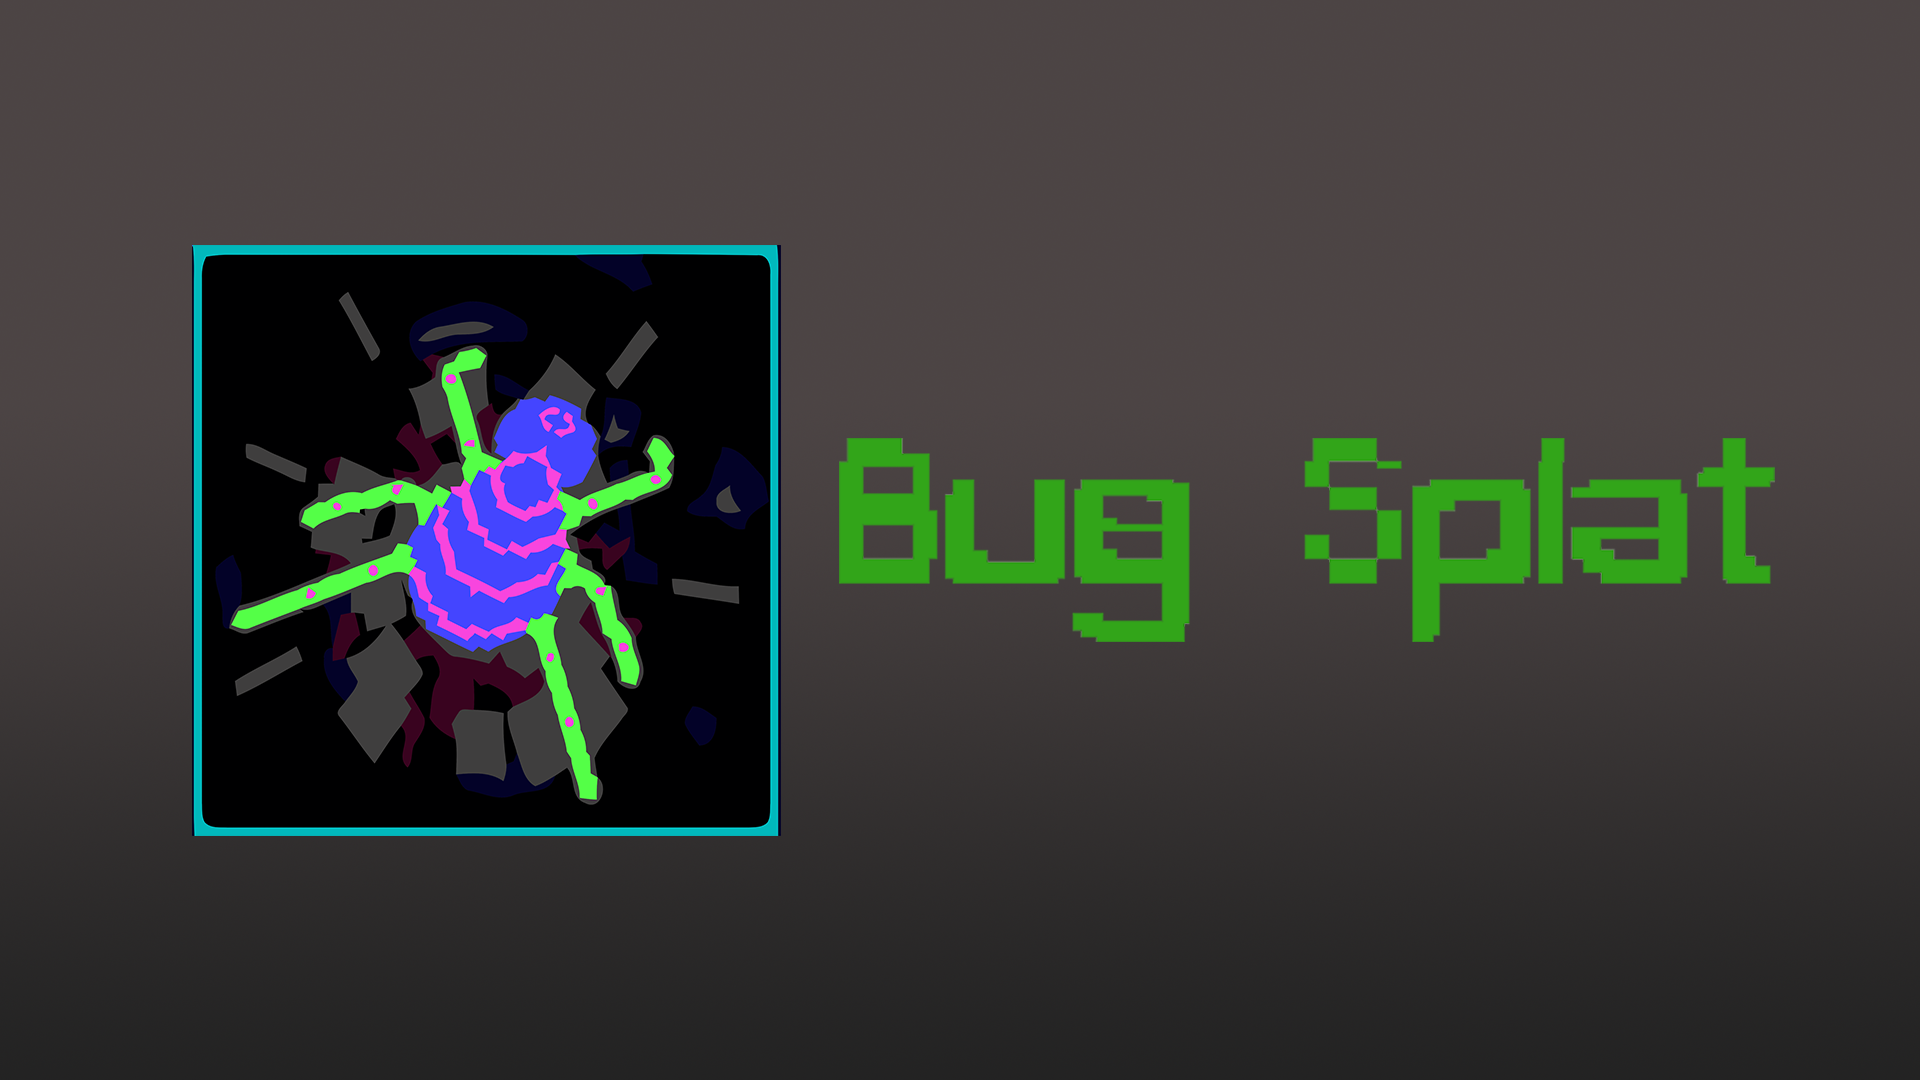 Bug Splat!